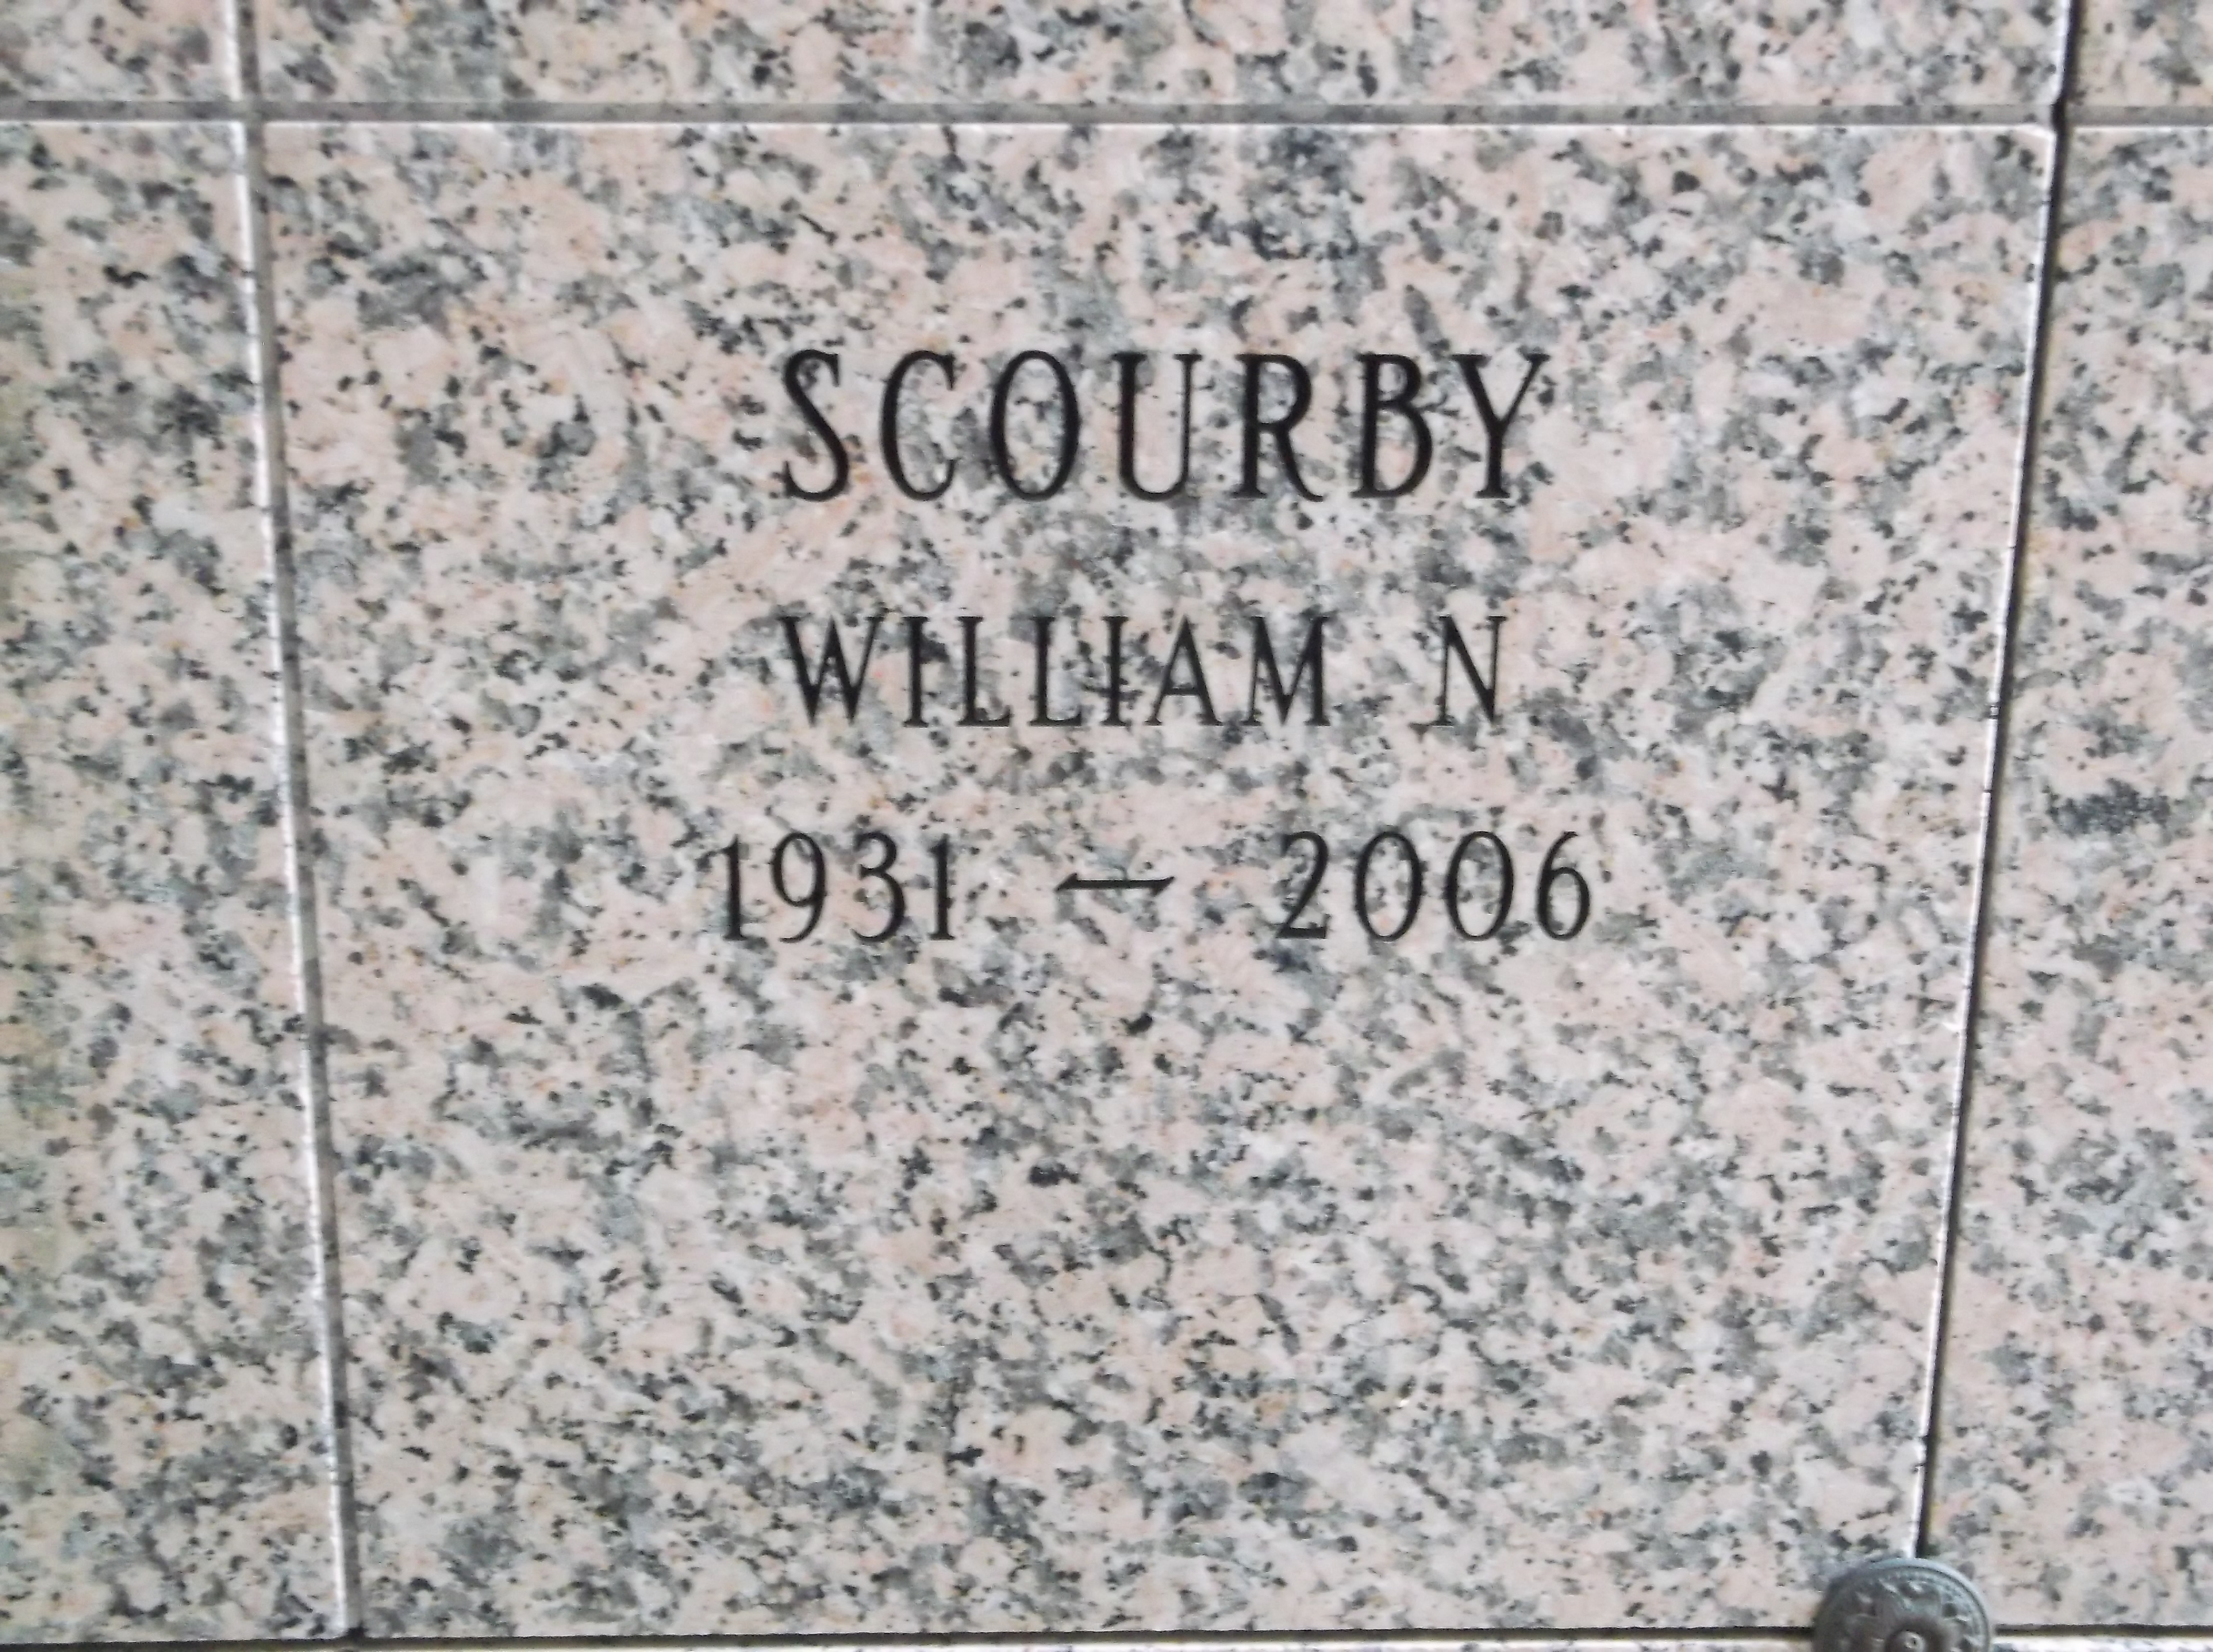 William N Scourby